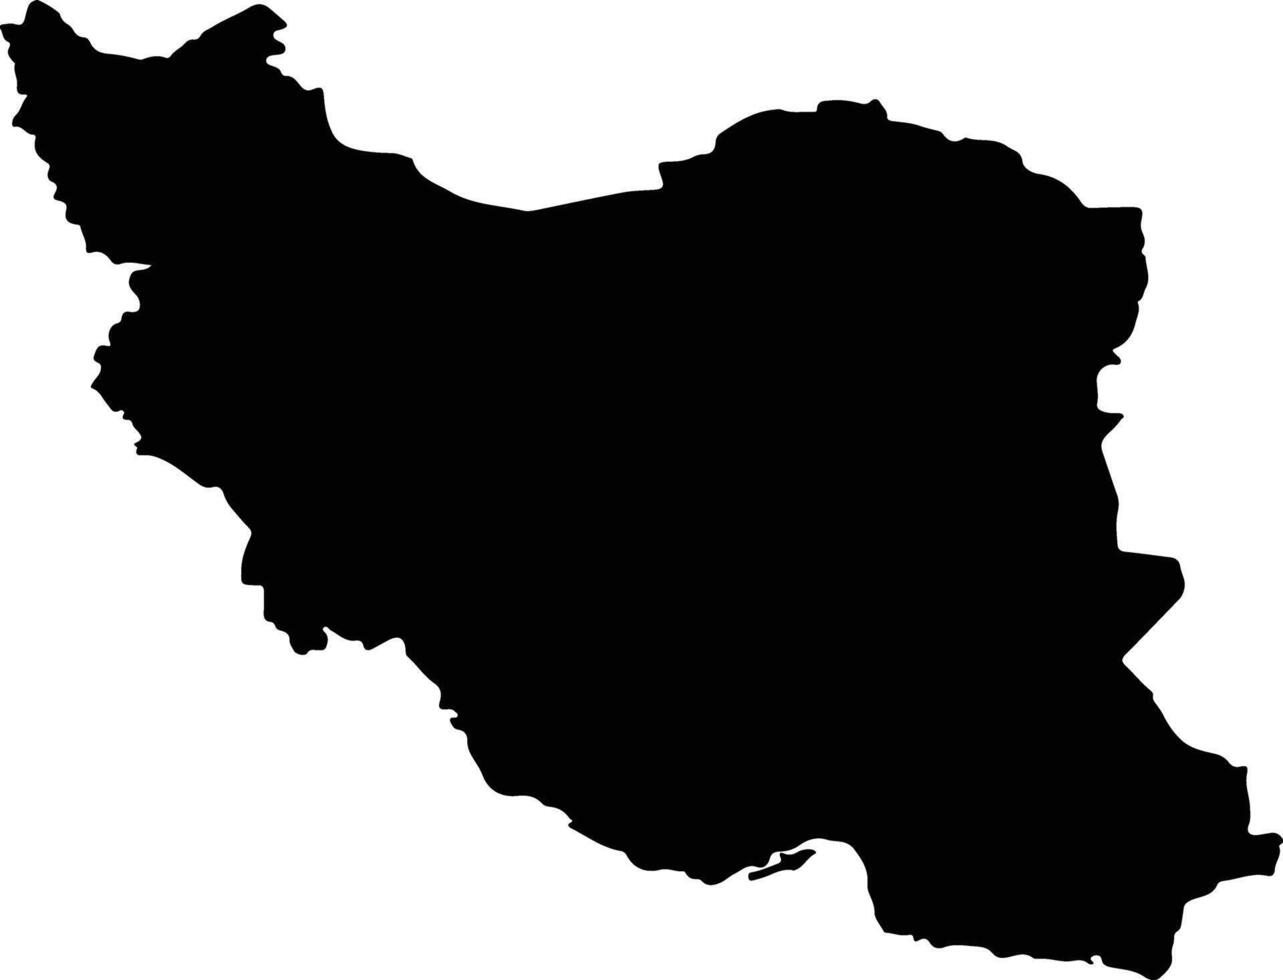 Iran silhouette map vector